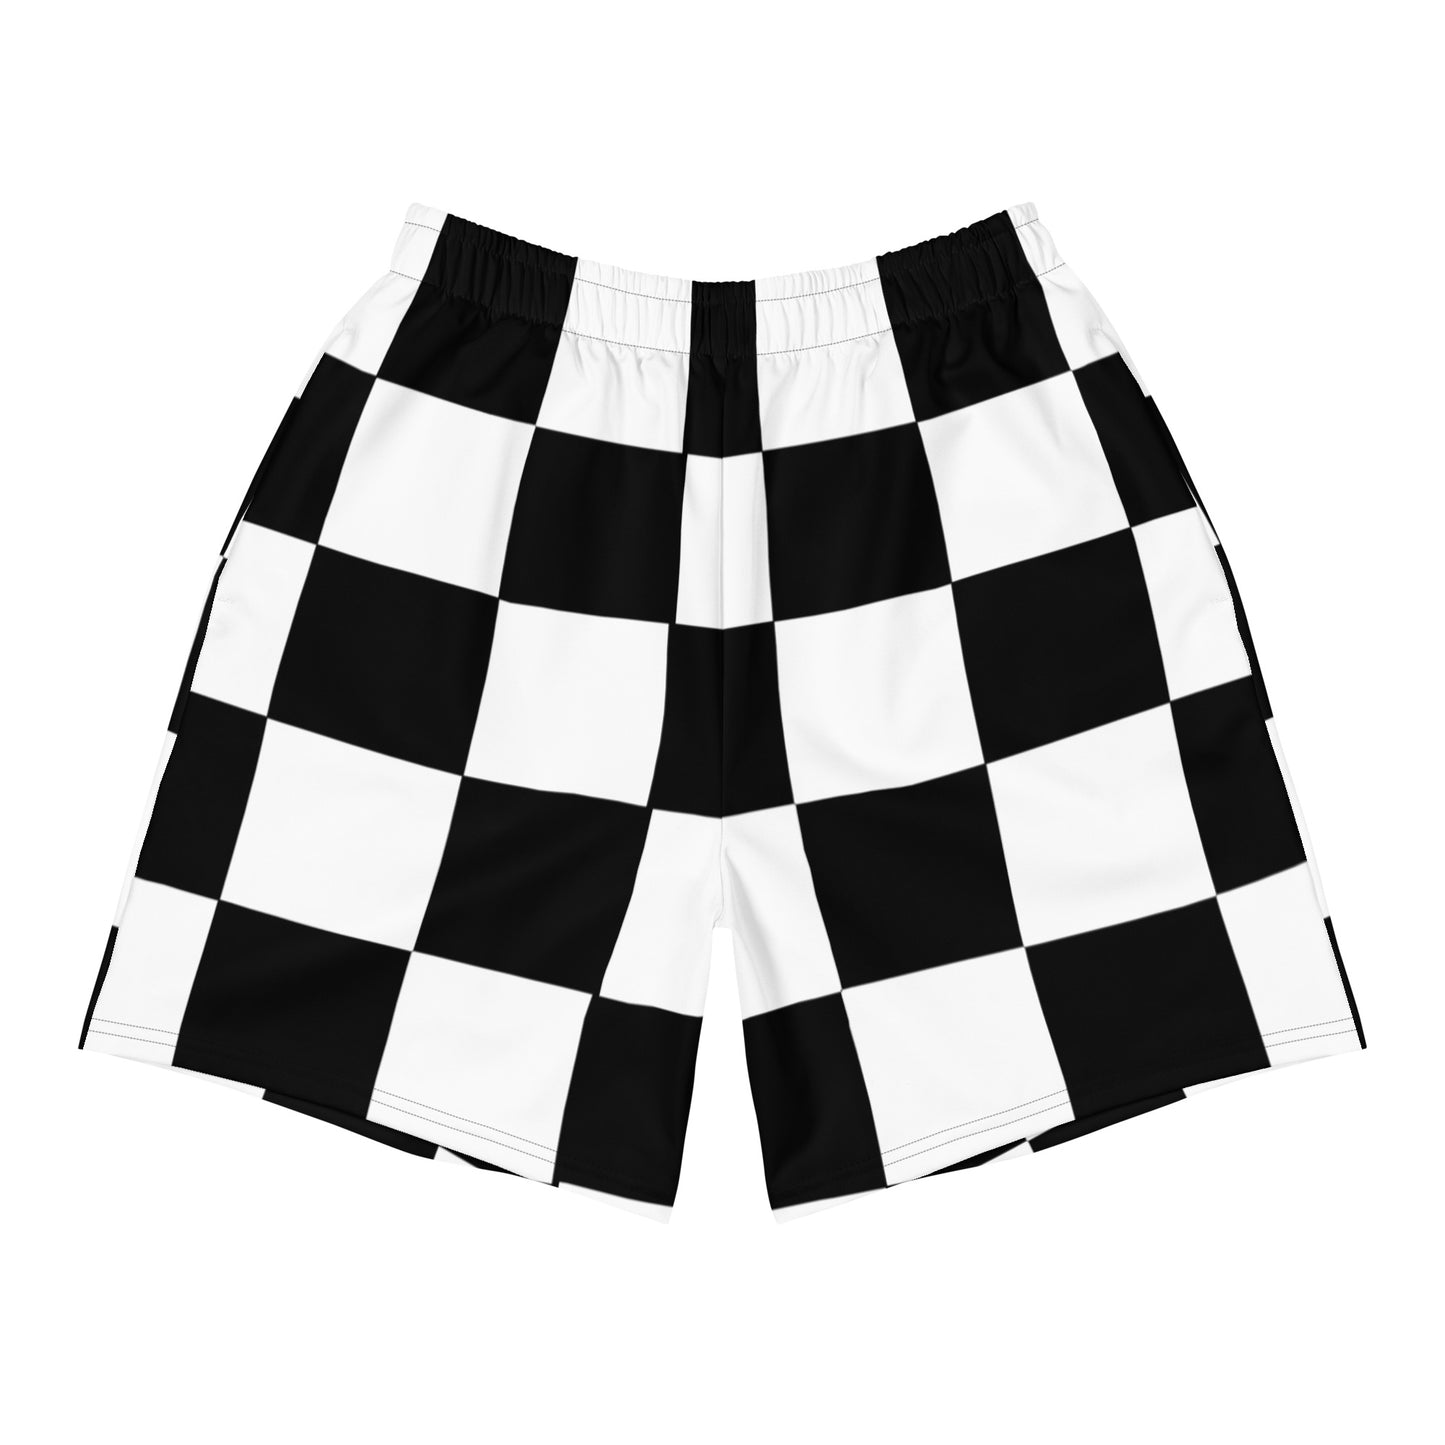 Black & White Chess Pattern - Sustainably Made Men's Short